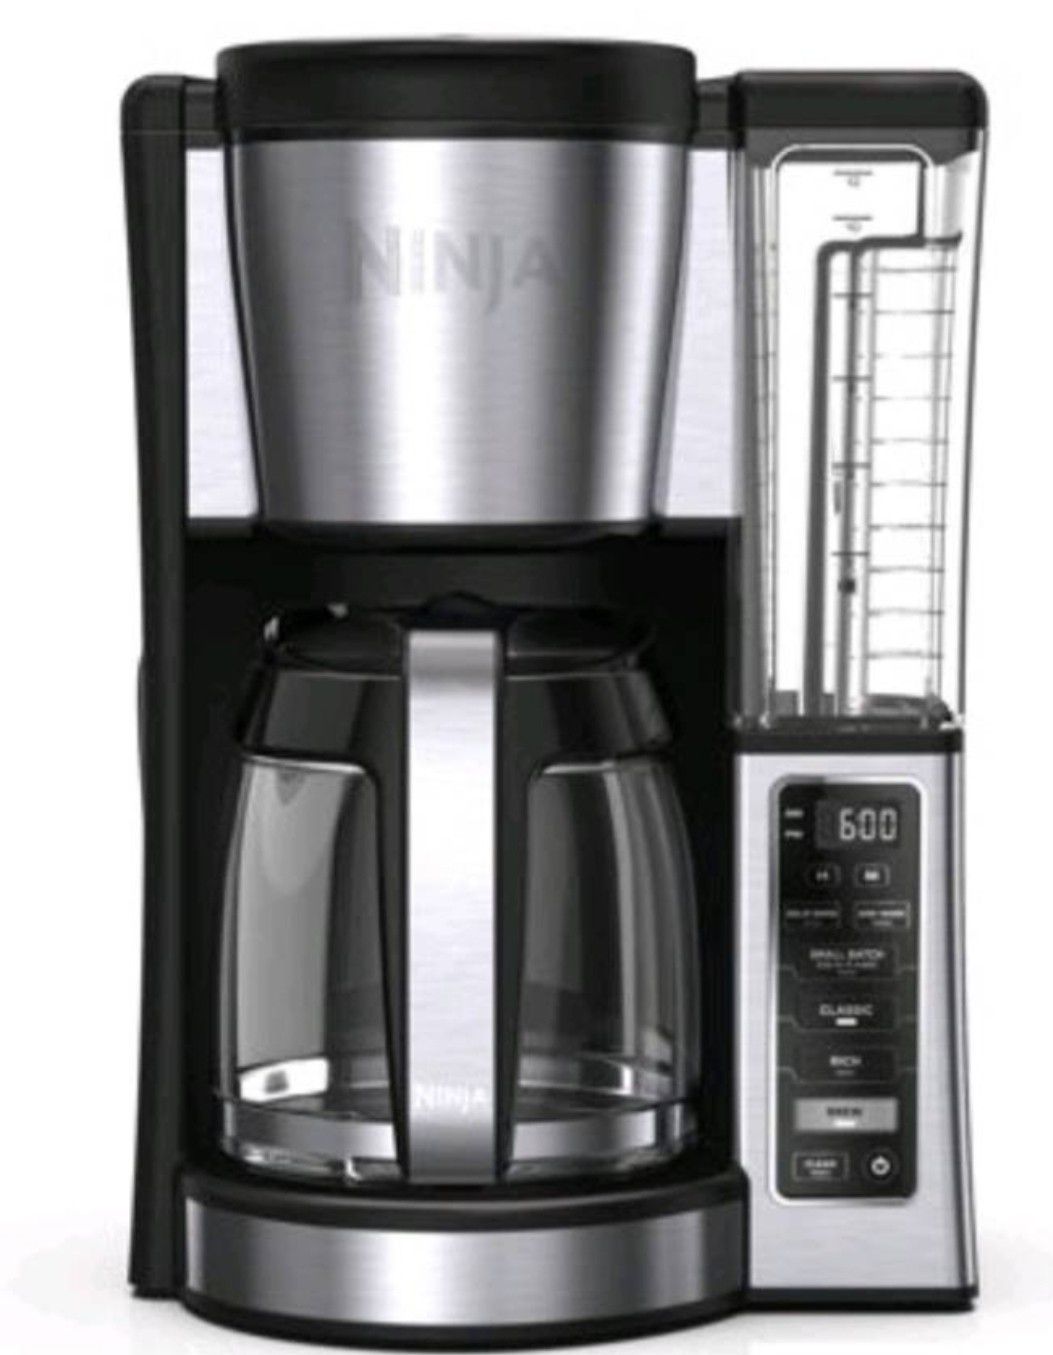 Ninja coffee maker programmable